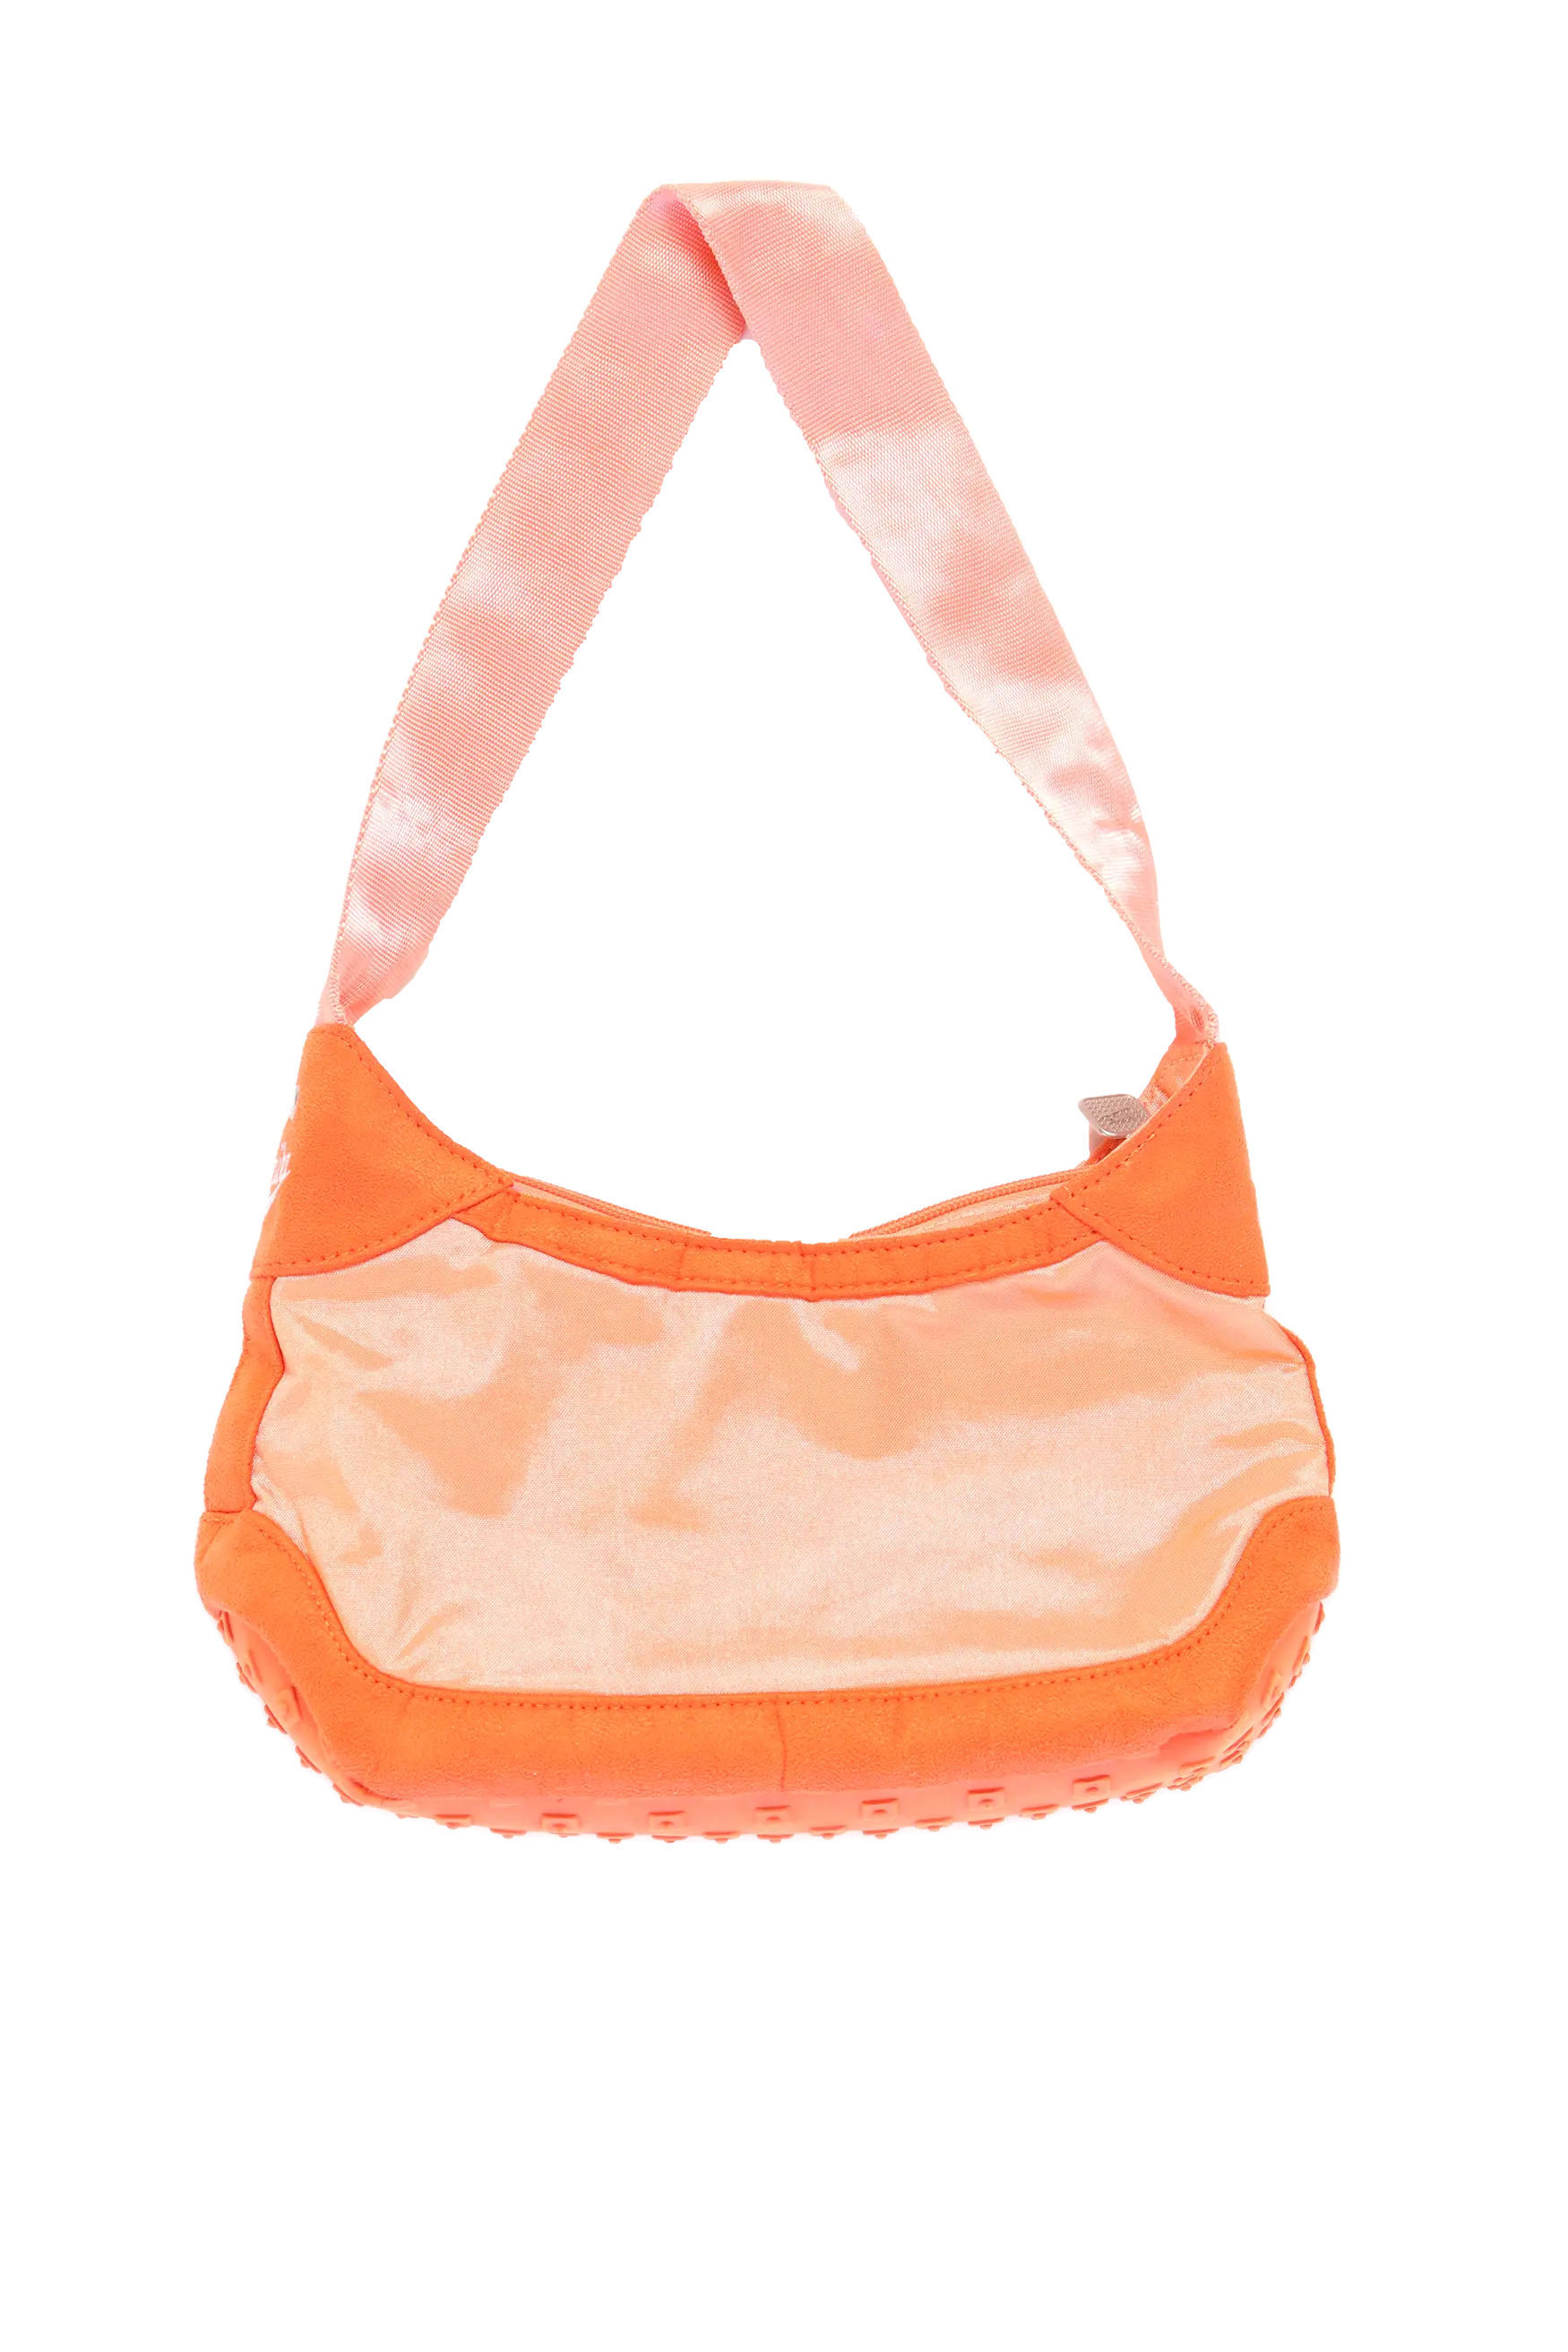 Nike 2K Peach Shoulder Bag